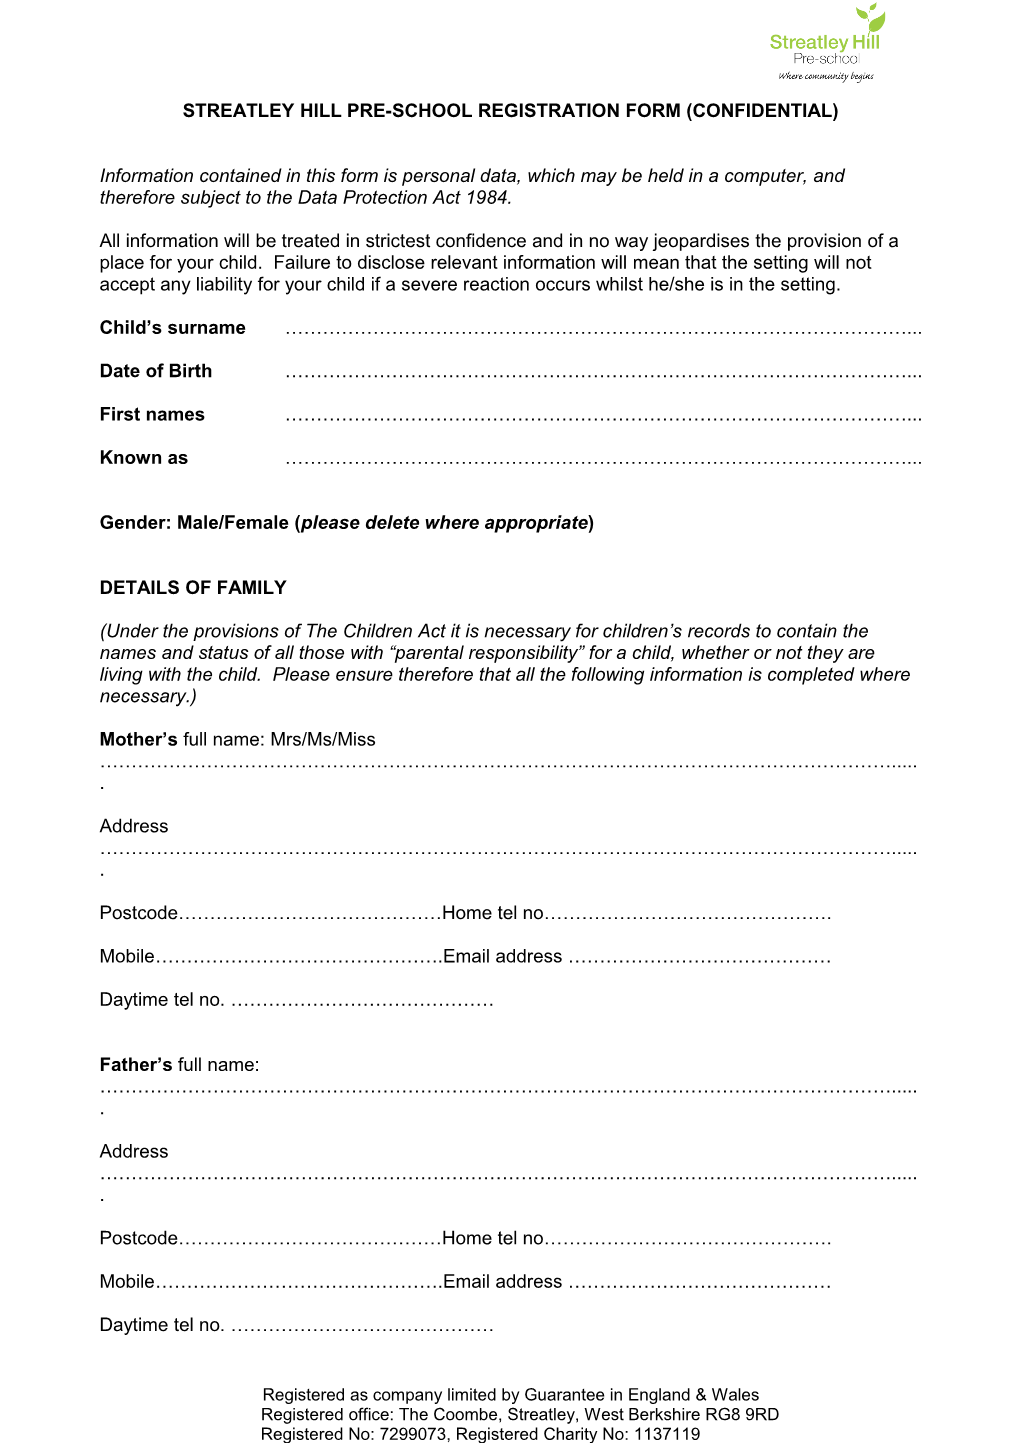 Streatley Hill Pre-School Registration Form (Confidential)